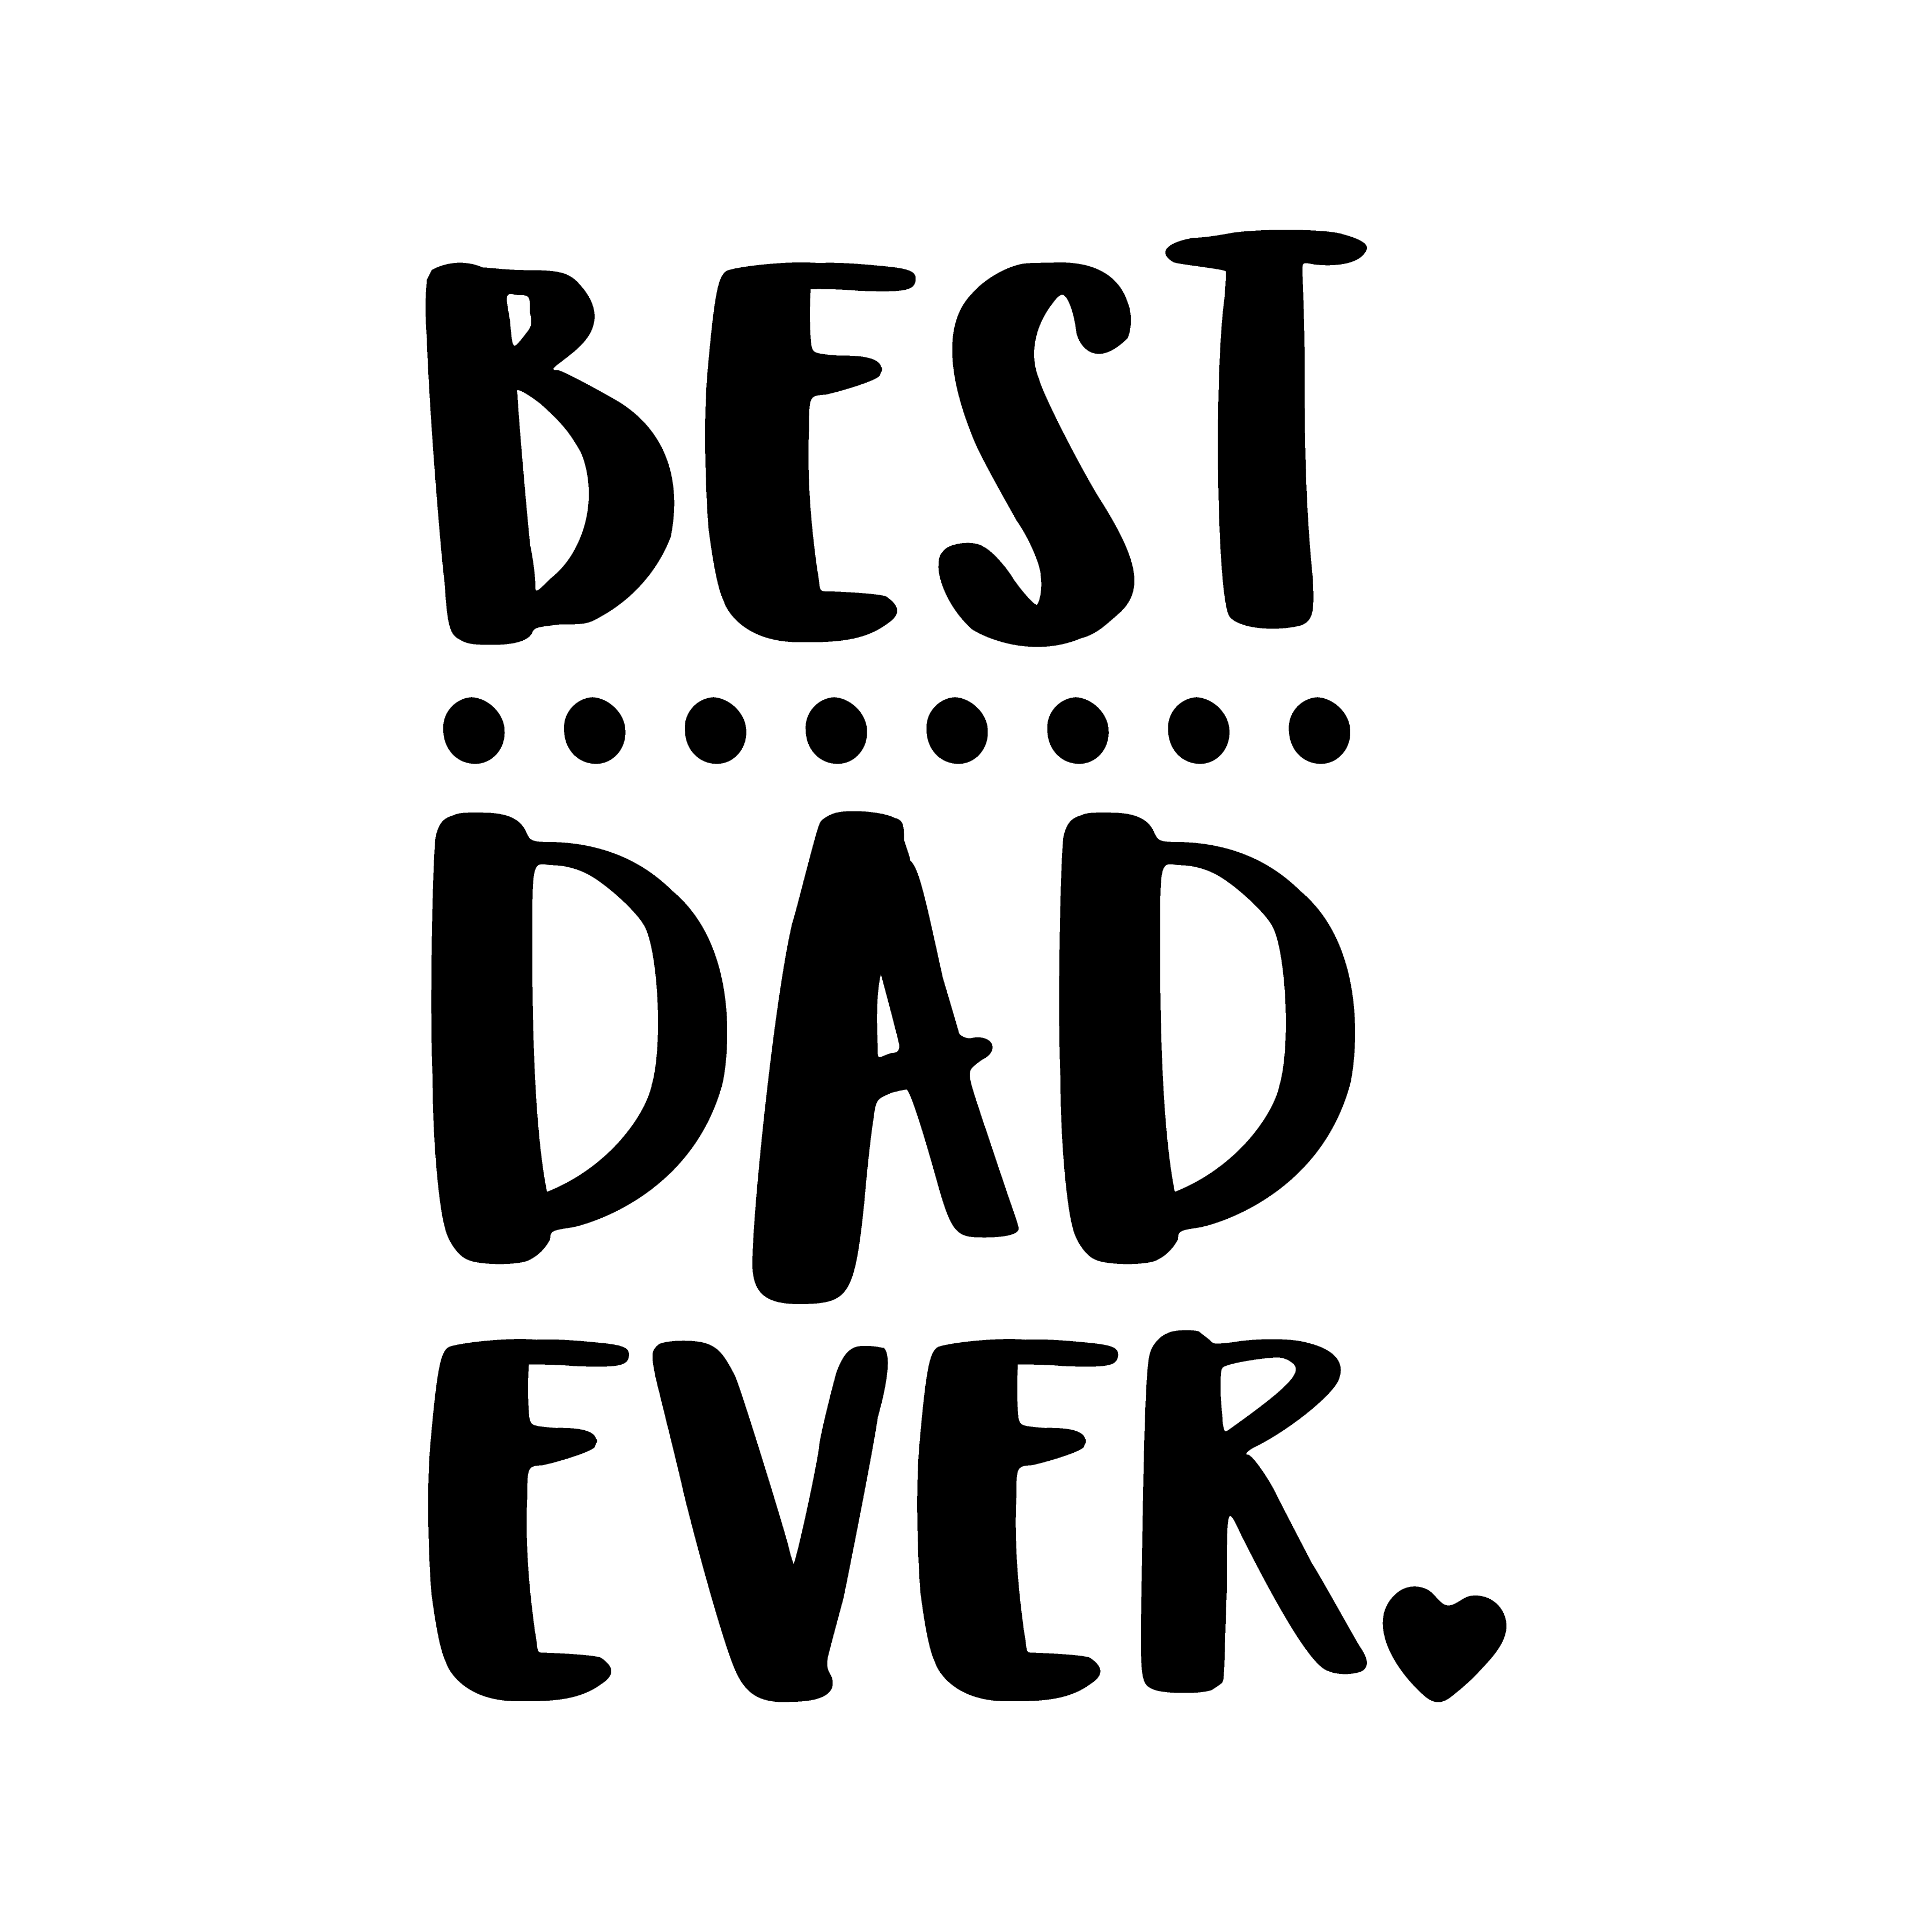 Fathers day best dad sticker 